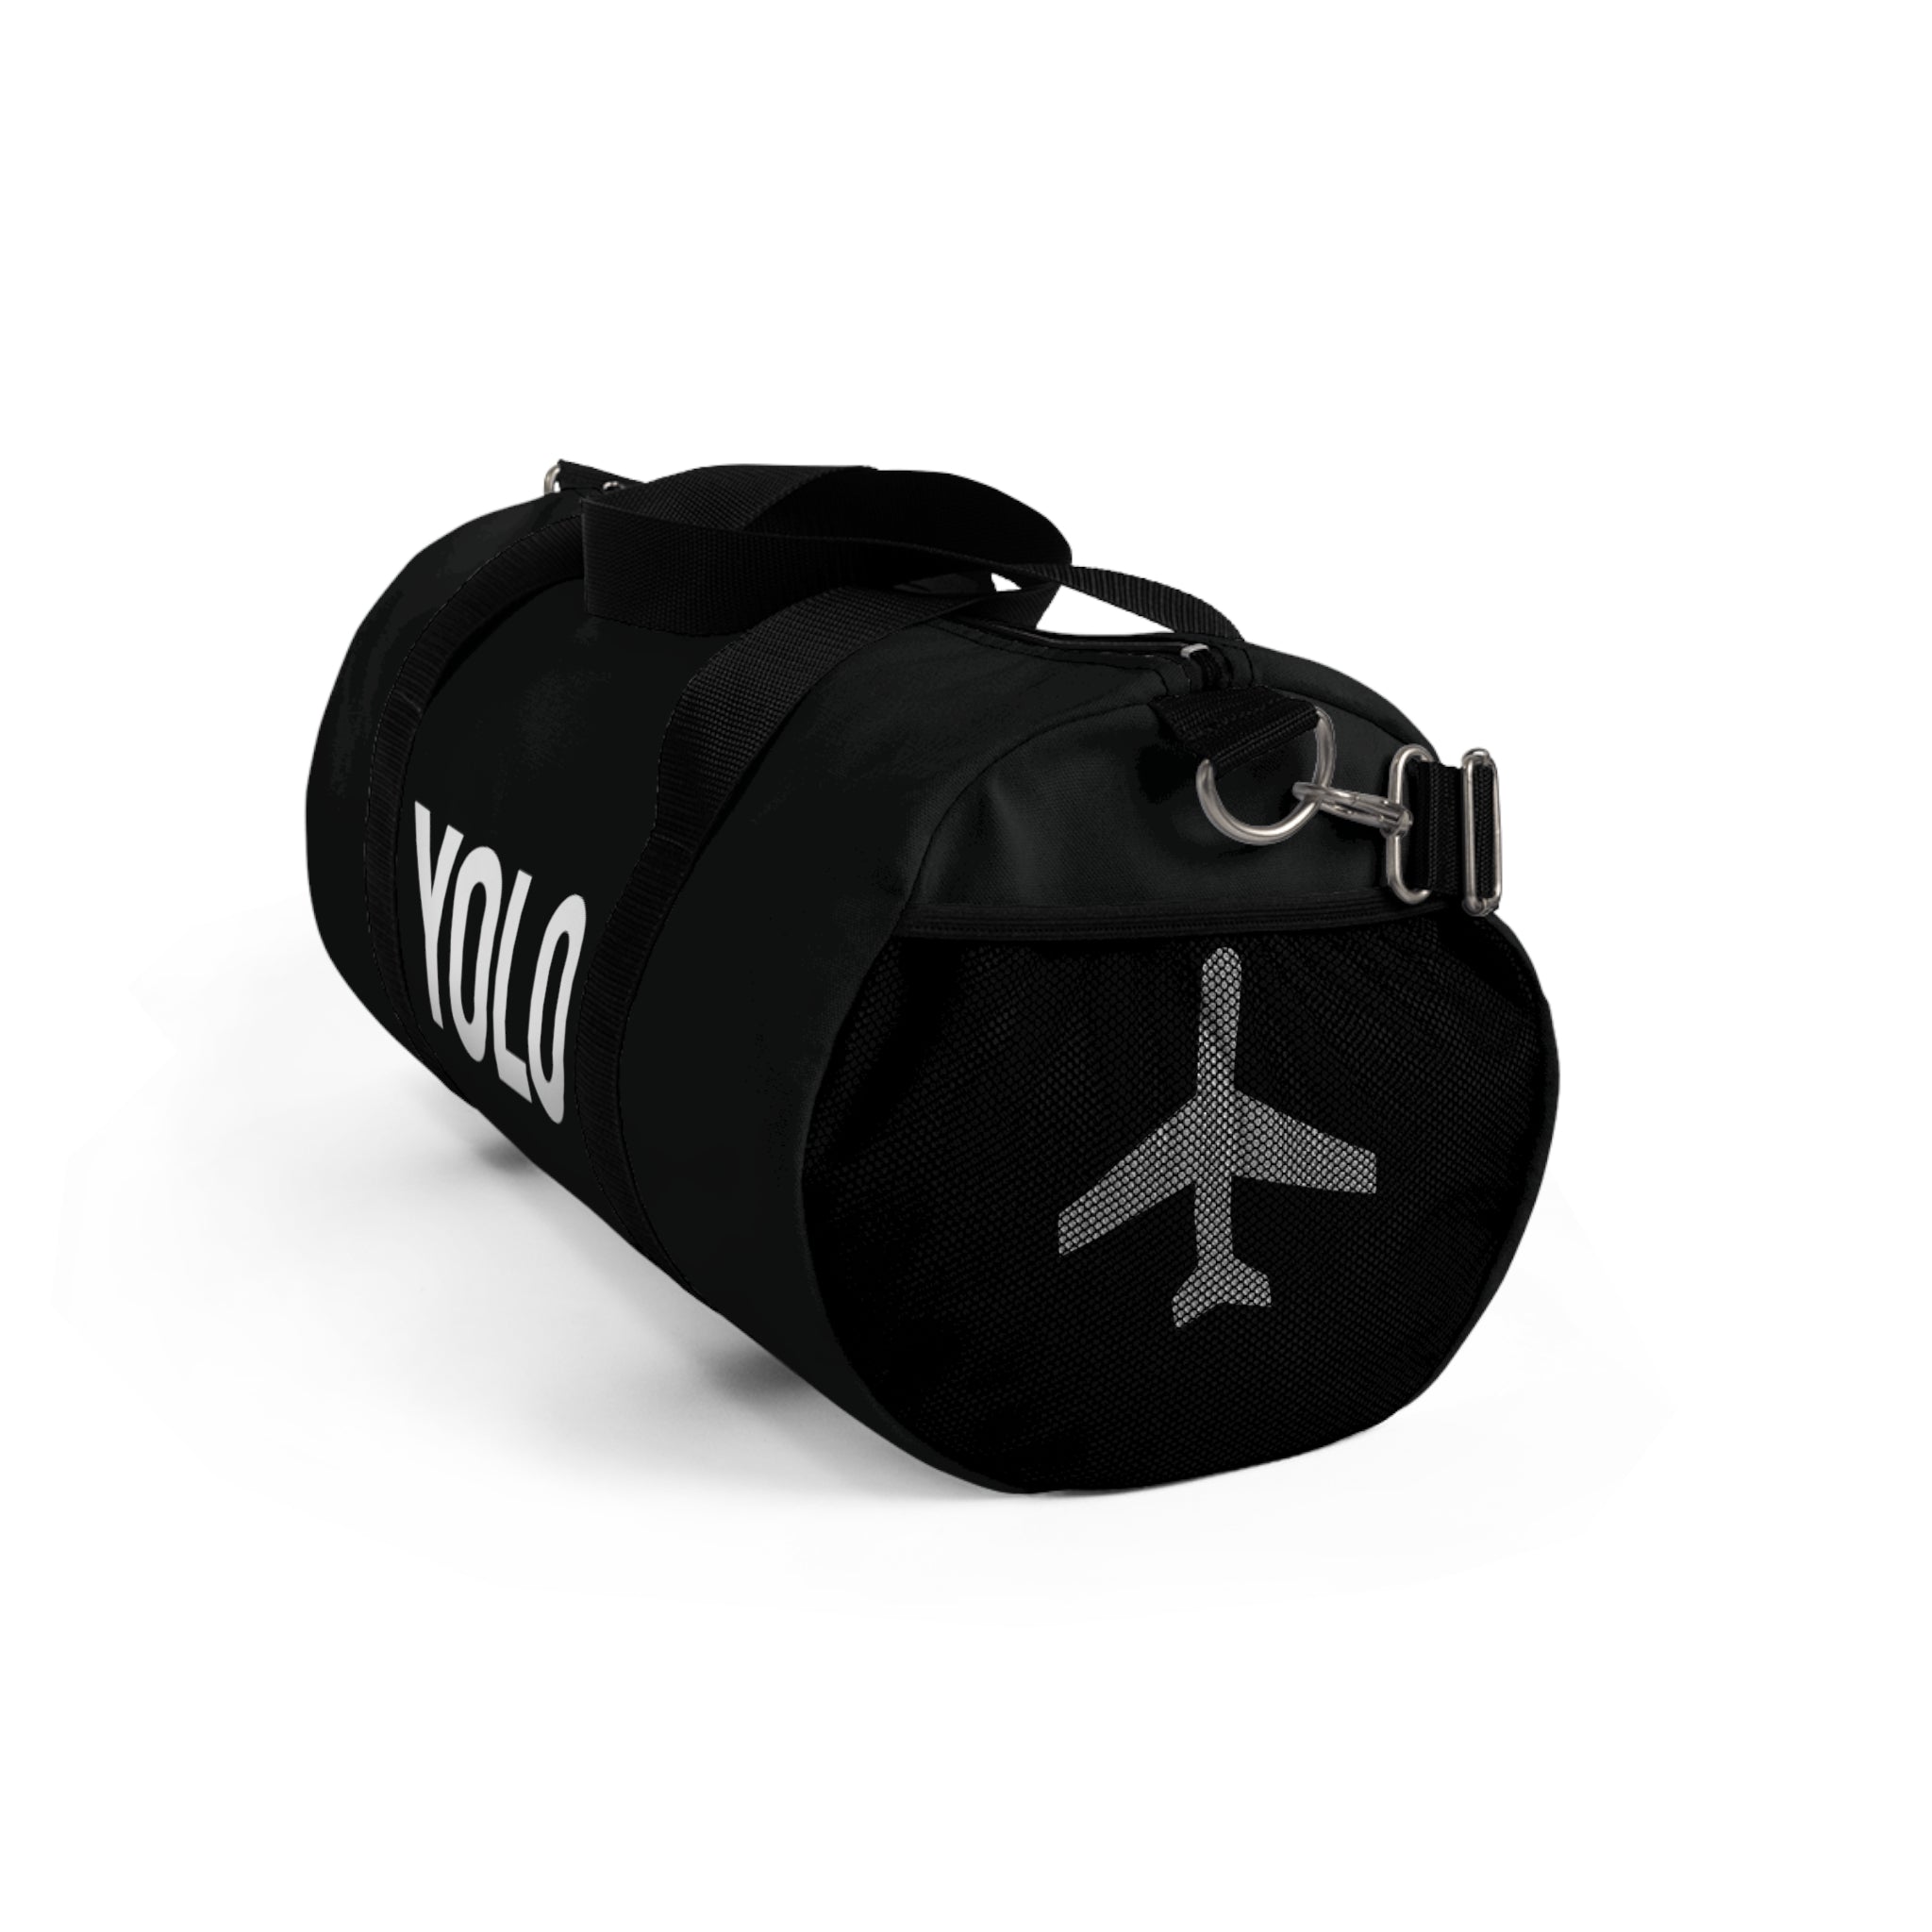 Yolo Duffle Bag (Black)